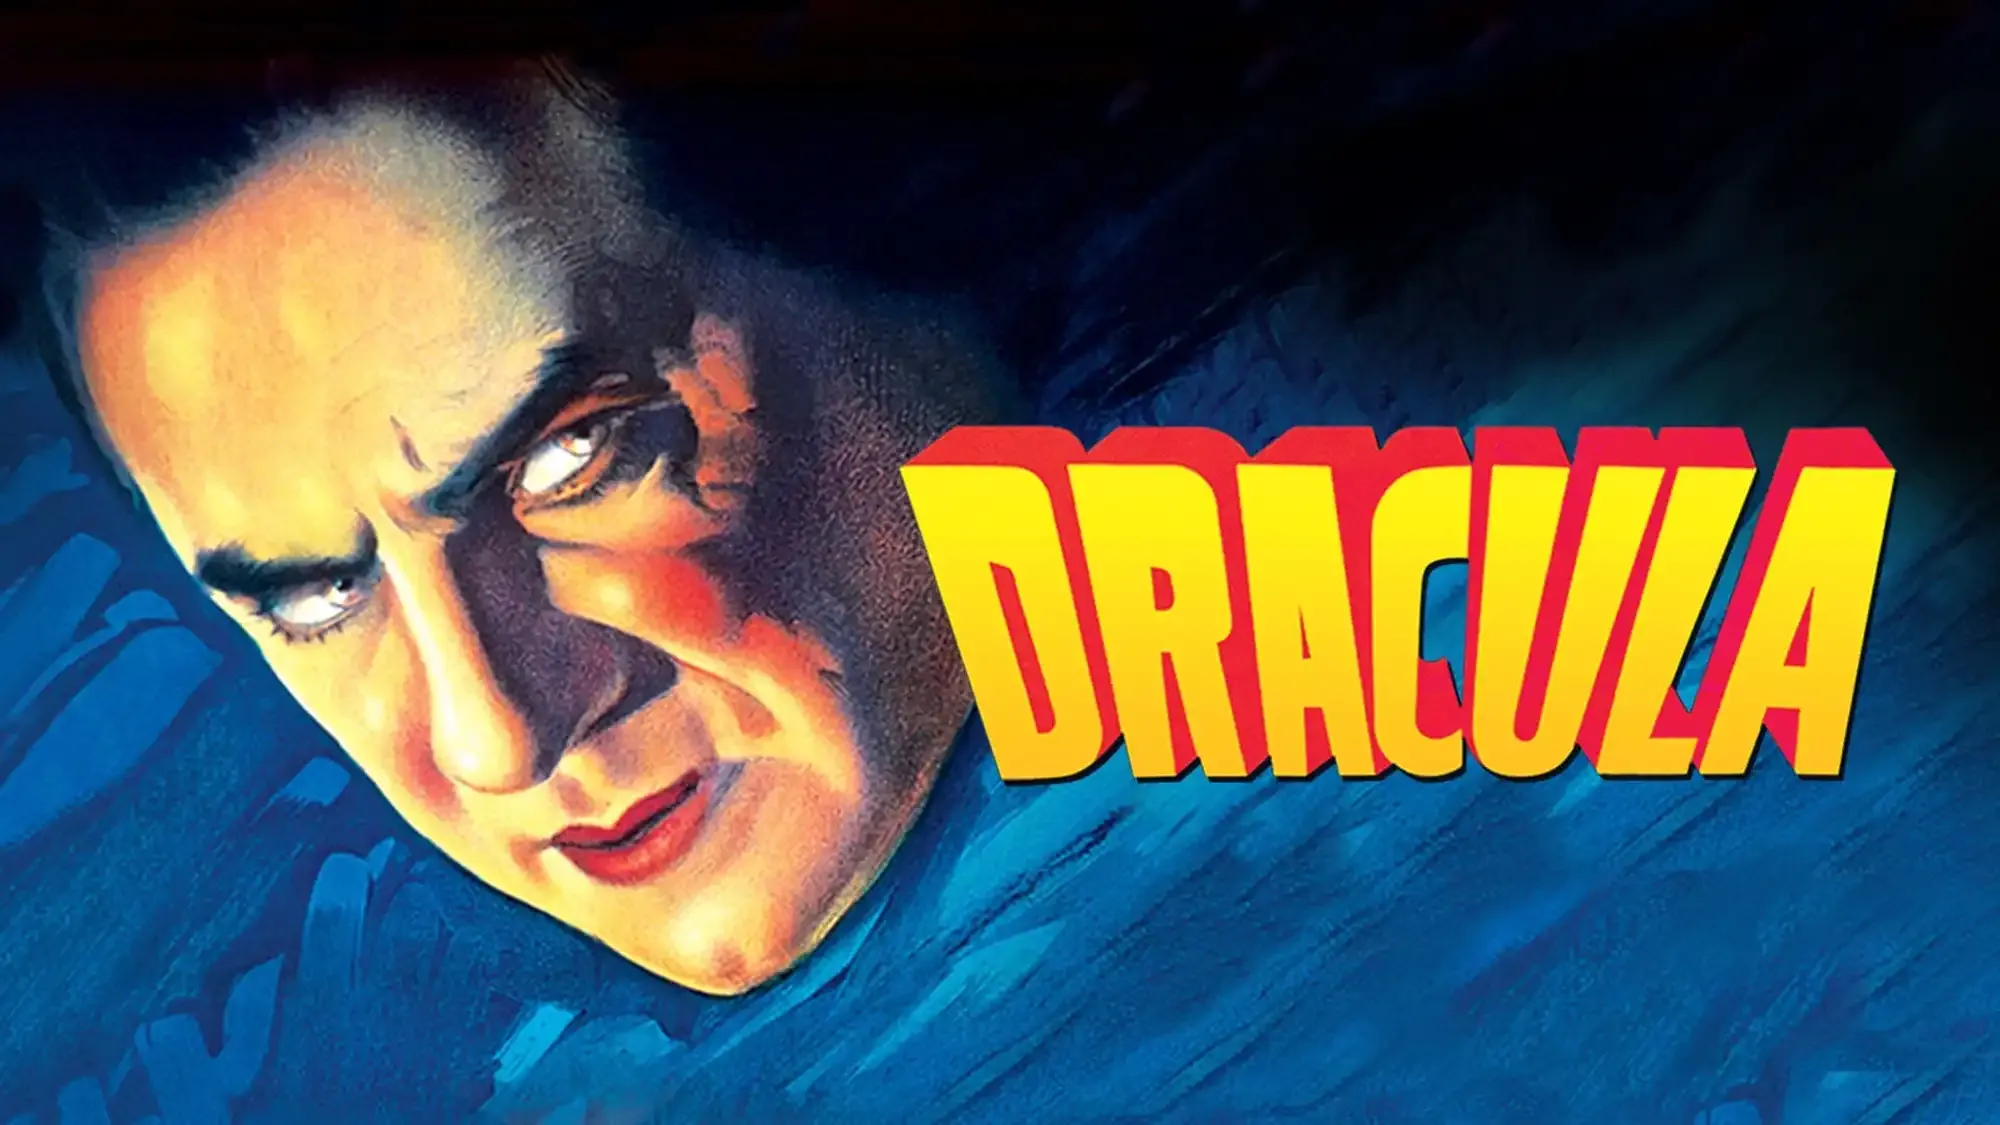 Dracula movie review